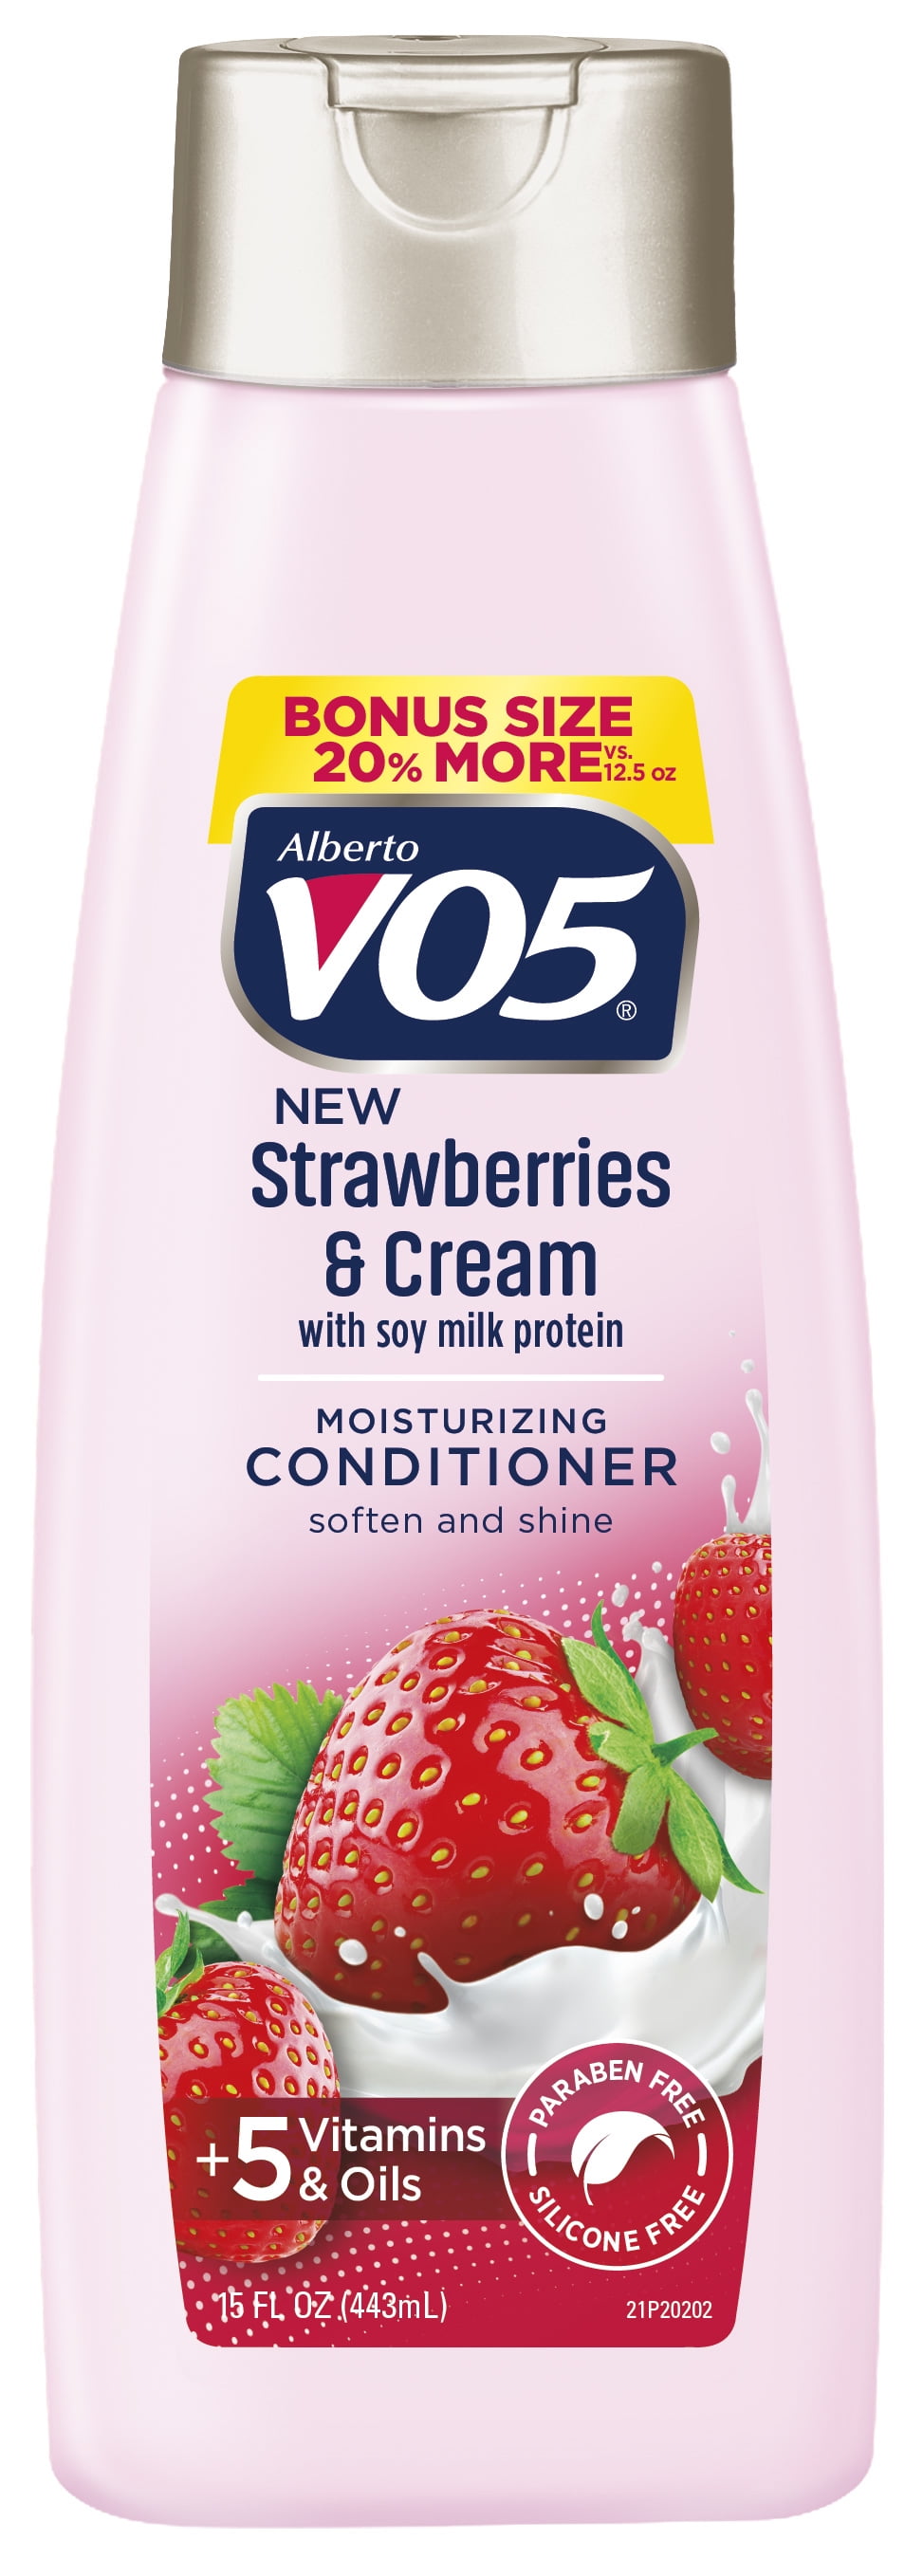 VO5 Moisture Milk Conditioner, Strawberries And Cream, 15 Fl Oz